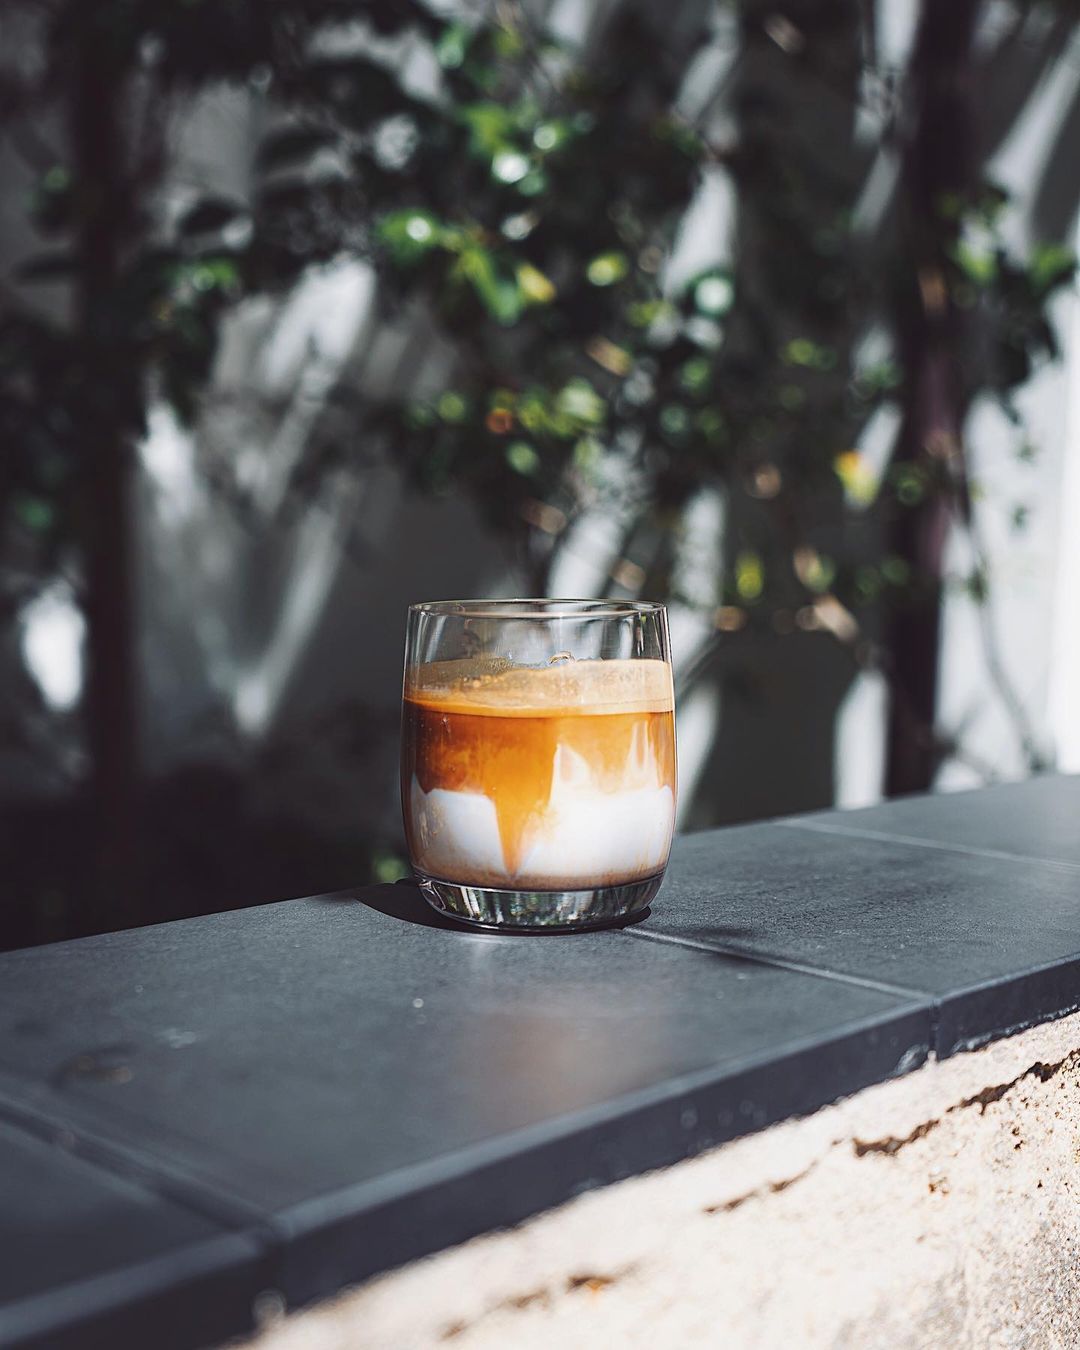 kyoto cafes - iced cafe latte